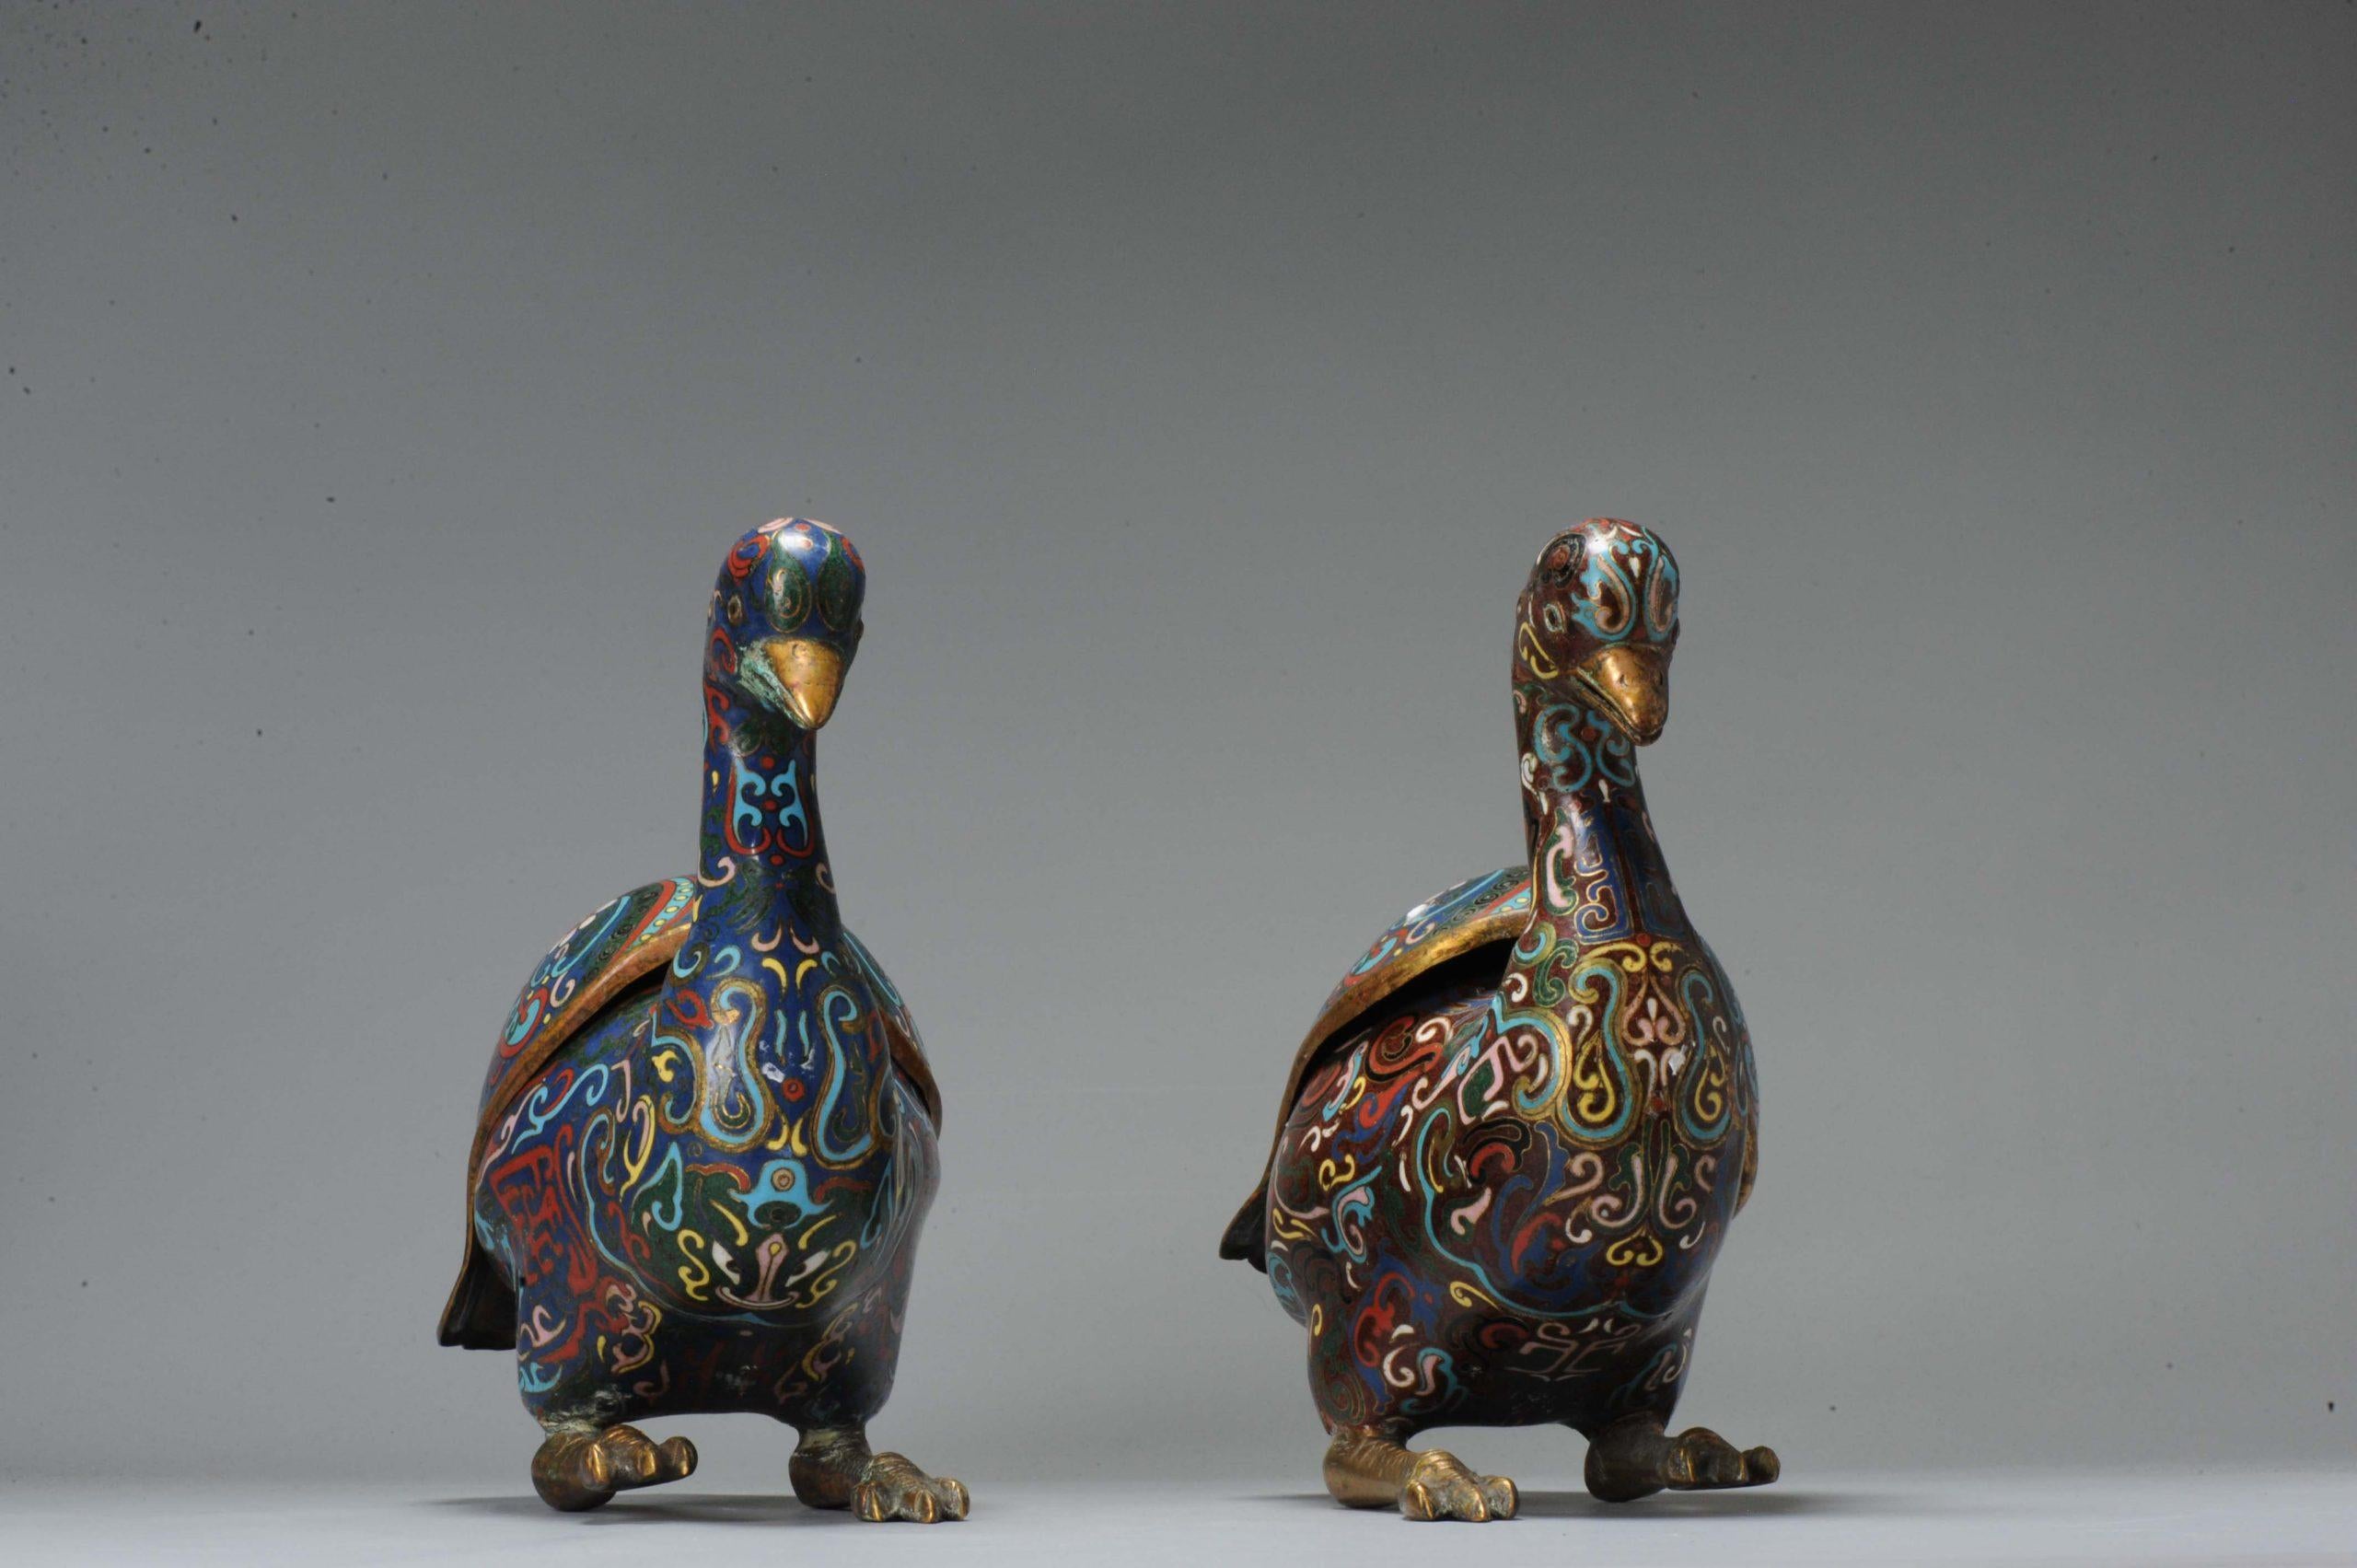 Antique Bronze / Copper Cloisonné Burner Inscense Koro Geese or Swan For Sale 8